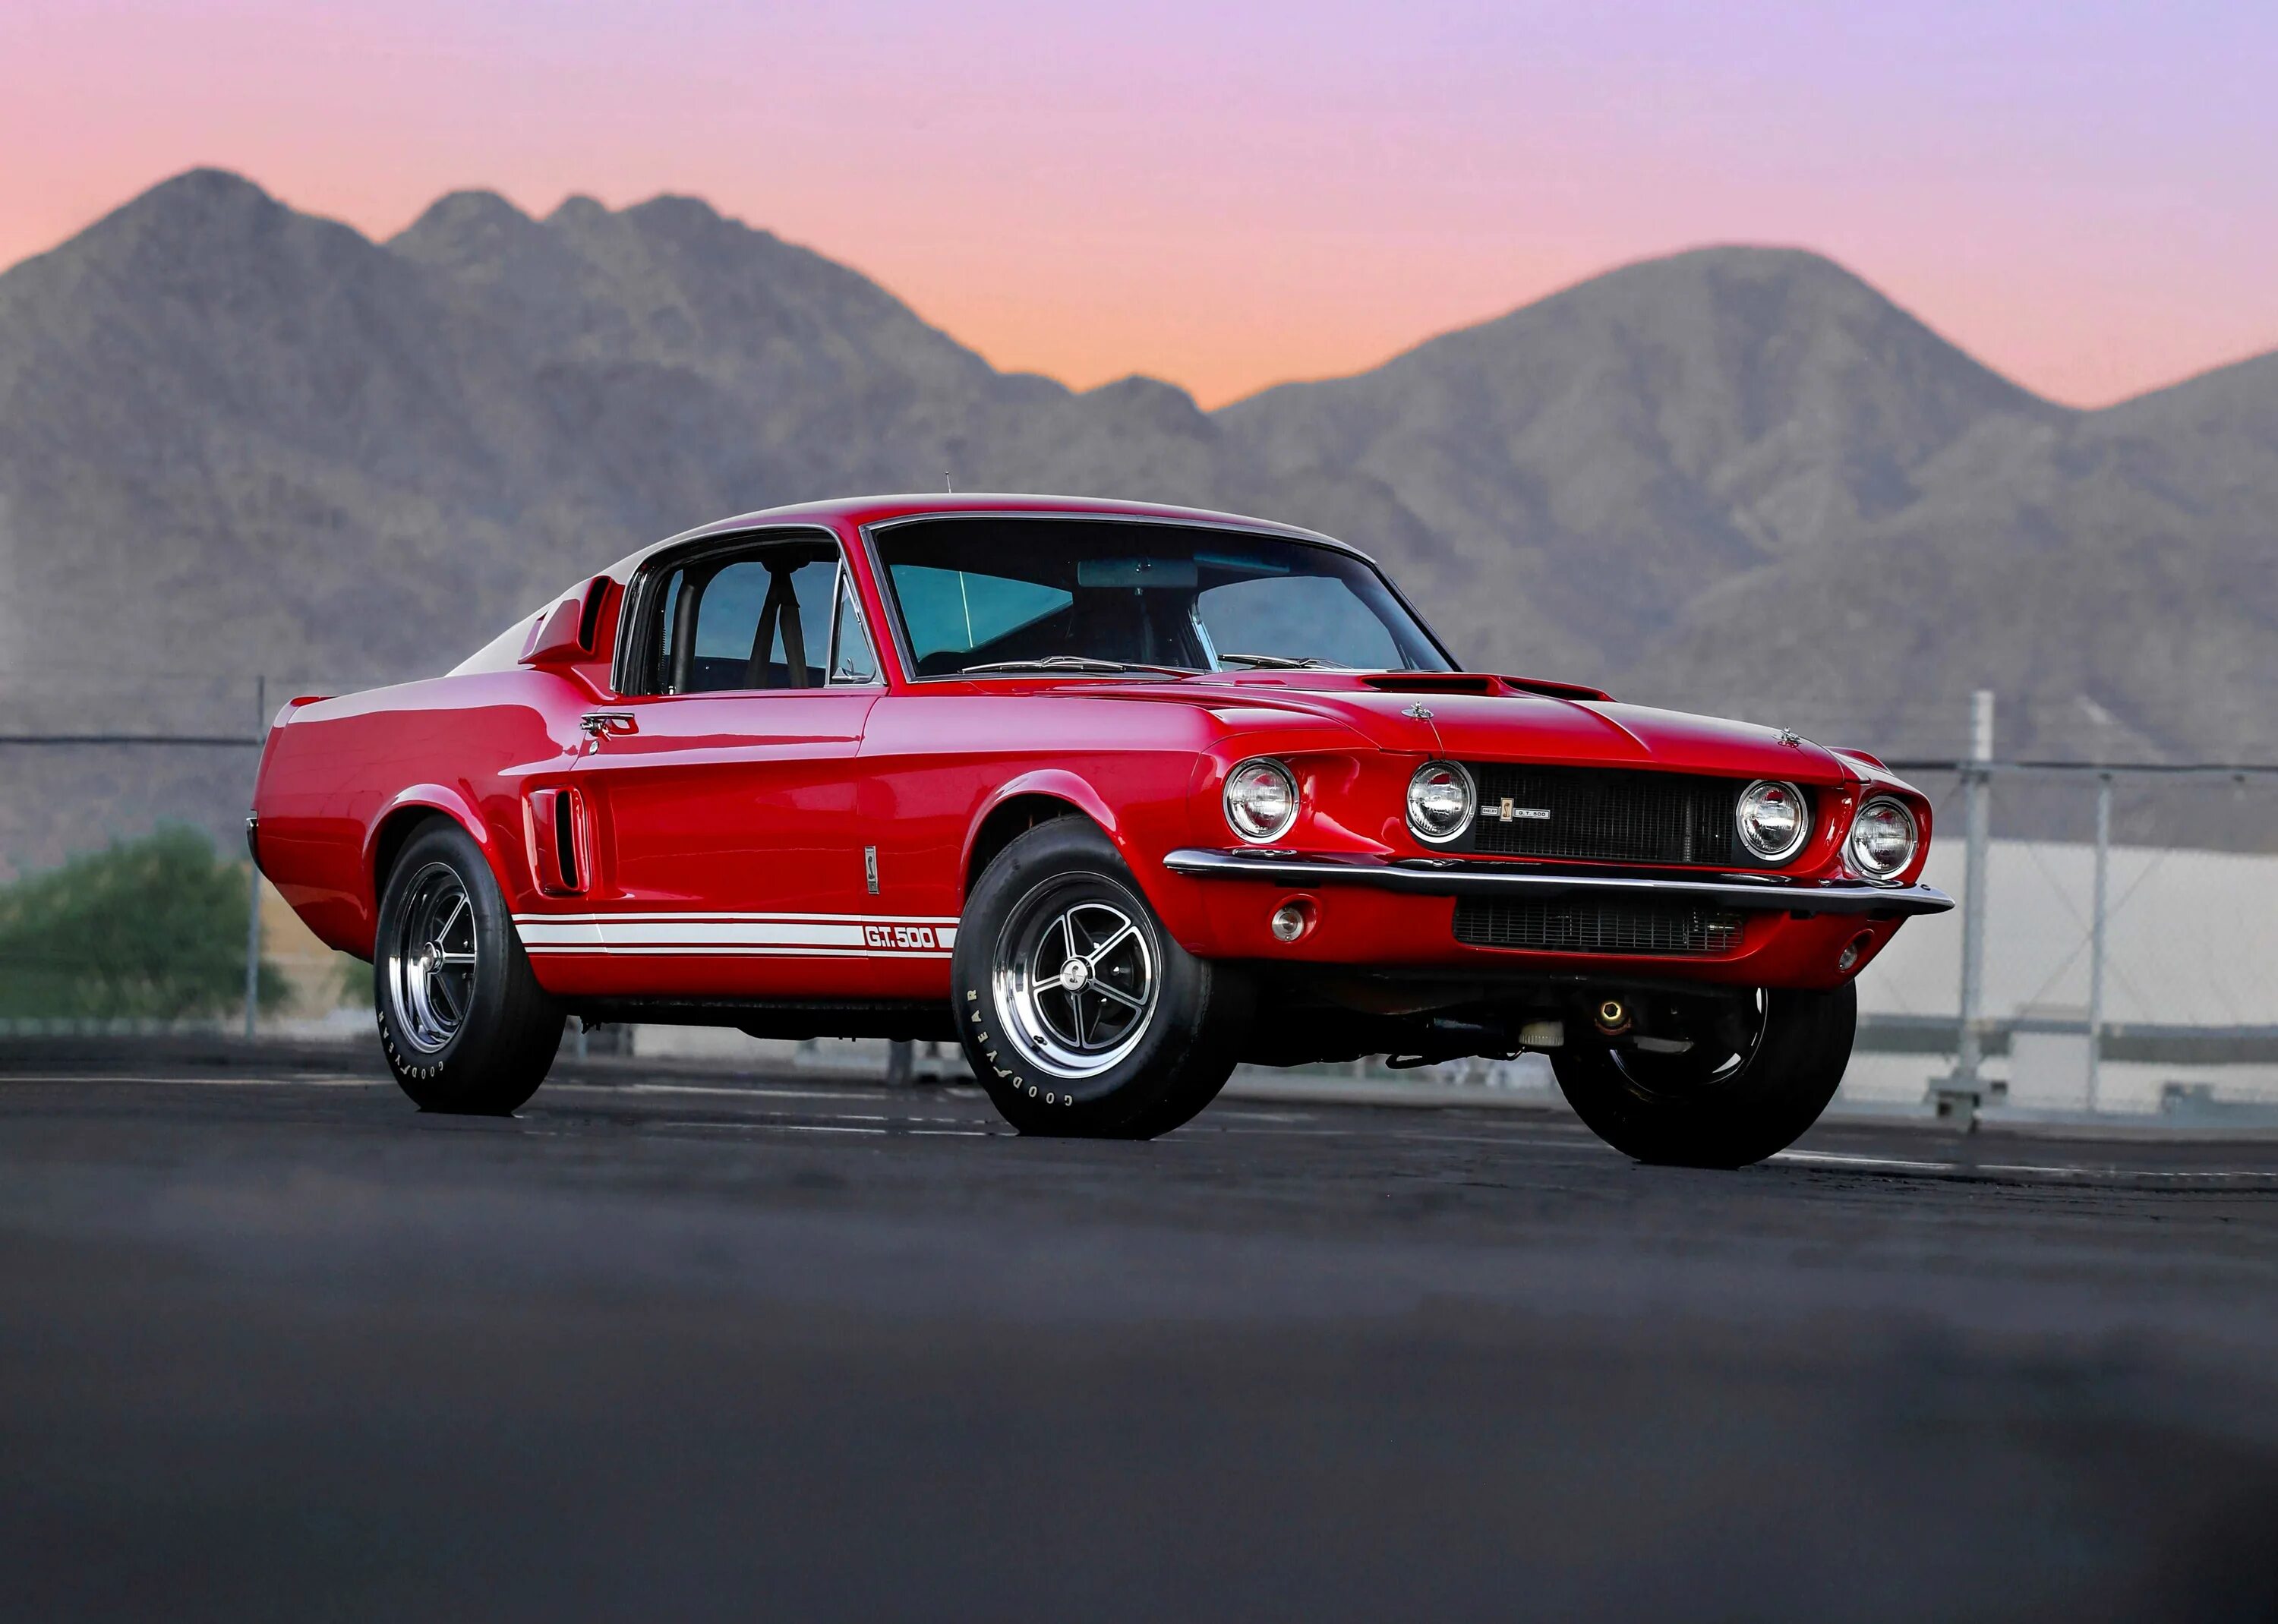 Mustang shelby gt 500. Форд Мустанг ГТ 1967. Форд Мустанг Шелби 1967. Форд Мустанг gt 500 1967. Форд Мустанг ГТ 500 Шелби 1967.